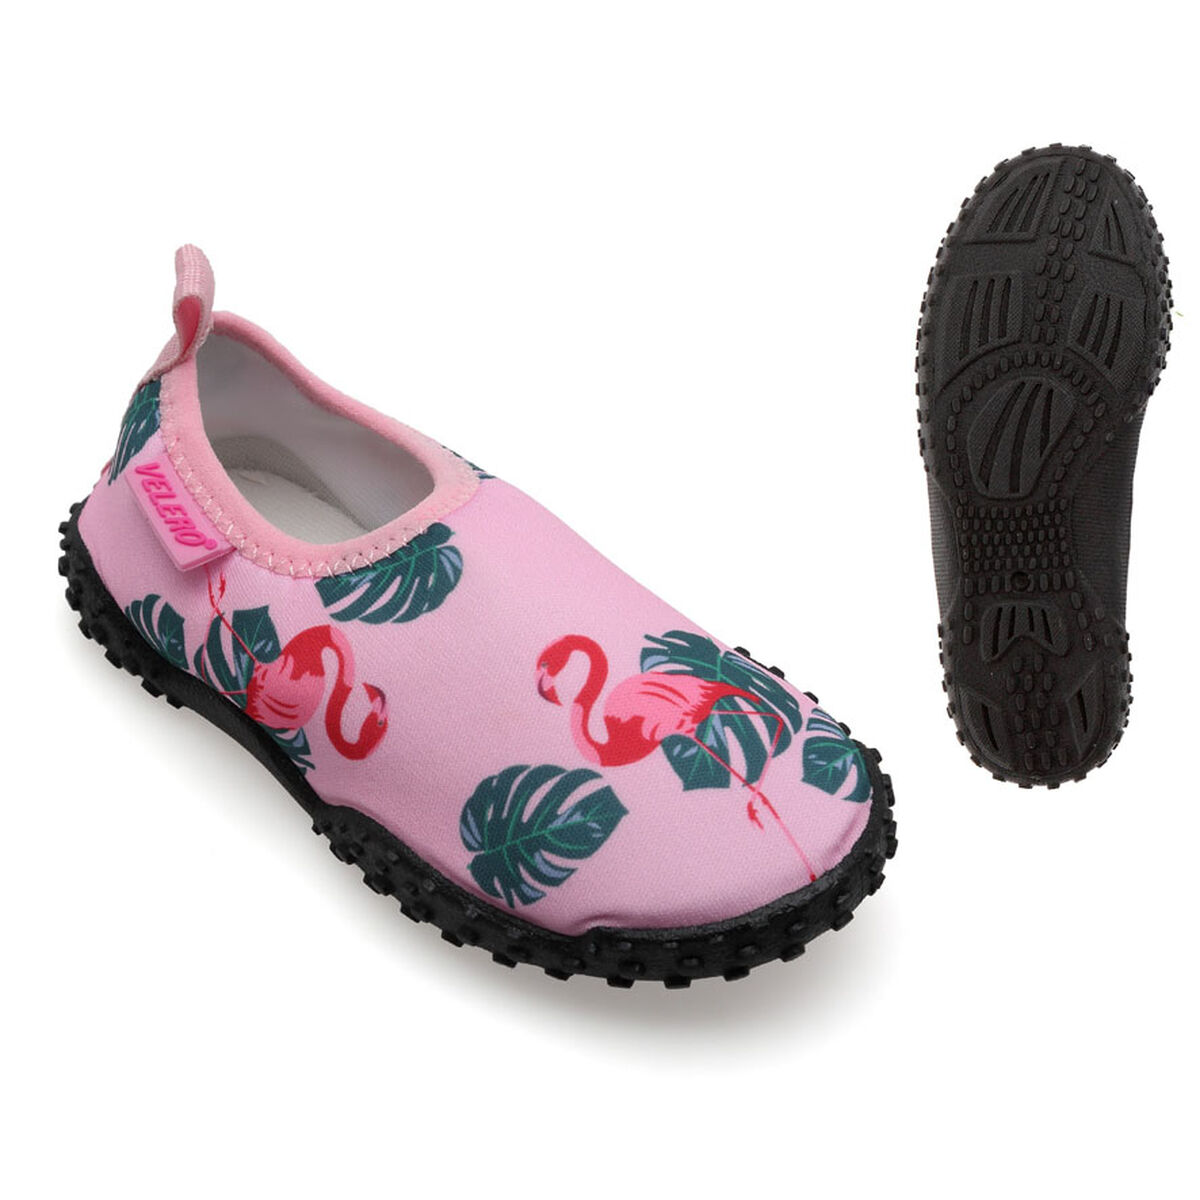 Botoși pentru Copii Flamingo Roz - Mărime la picior 29